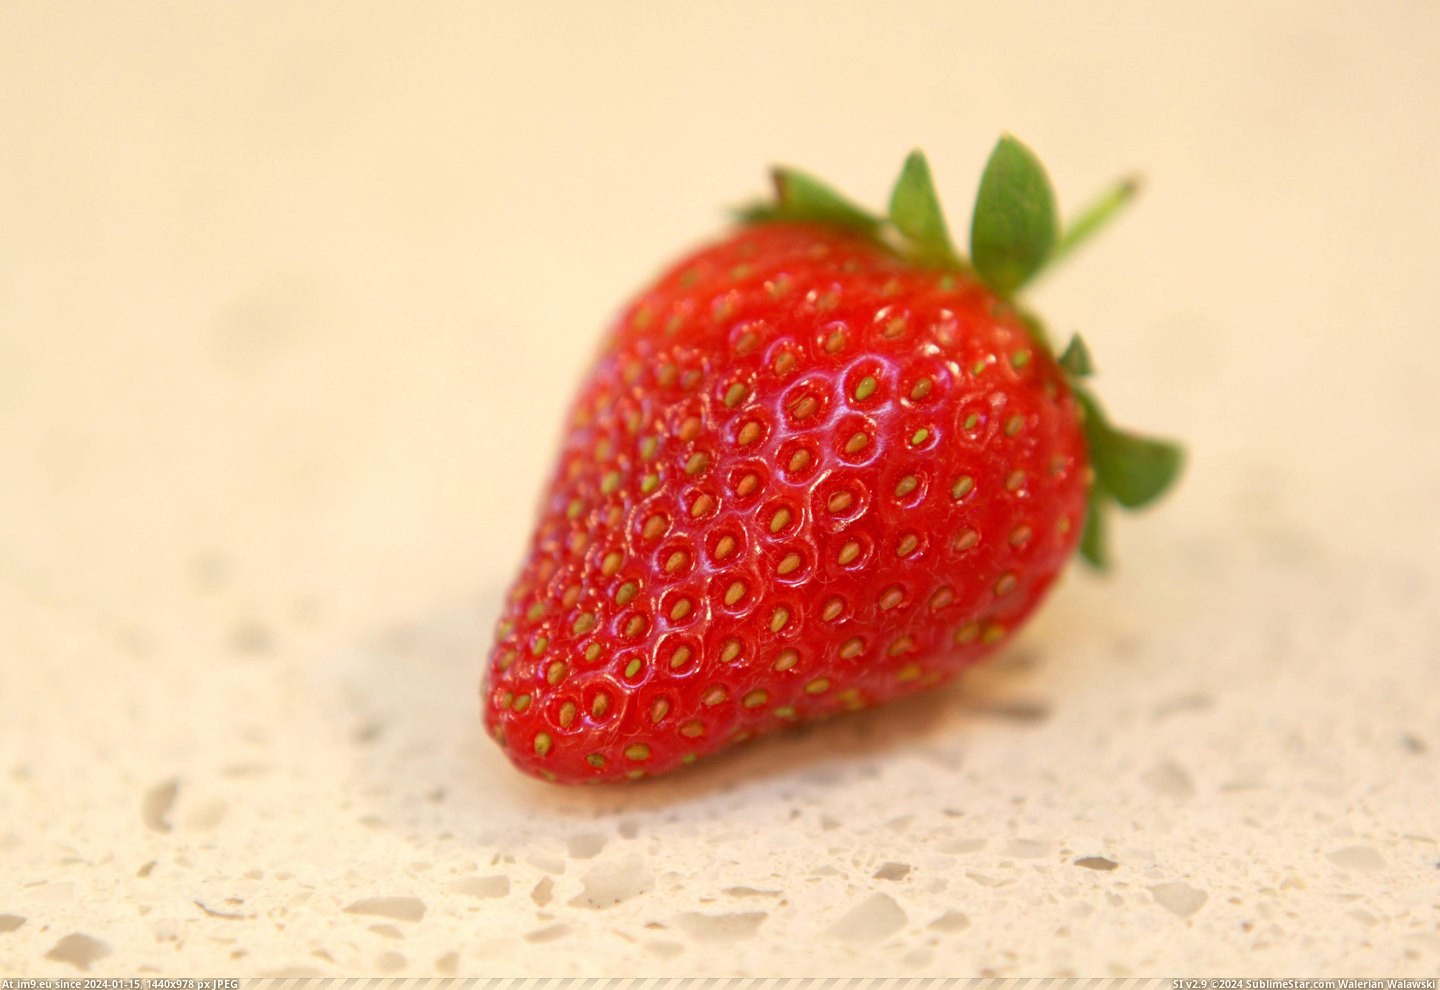 #Strawberry  #Seeds [Mildlyinteresting] This strawberry had 204 seeds. 4 Pic. (Изображение из альбом My r/MILDLYINTERESTING favs))